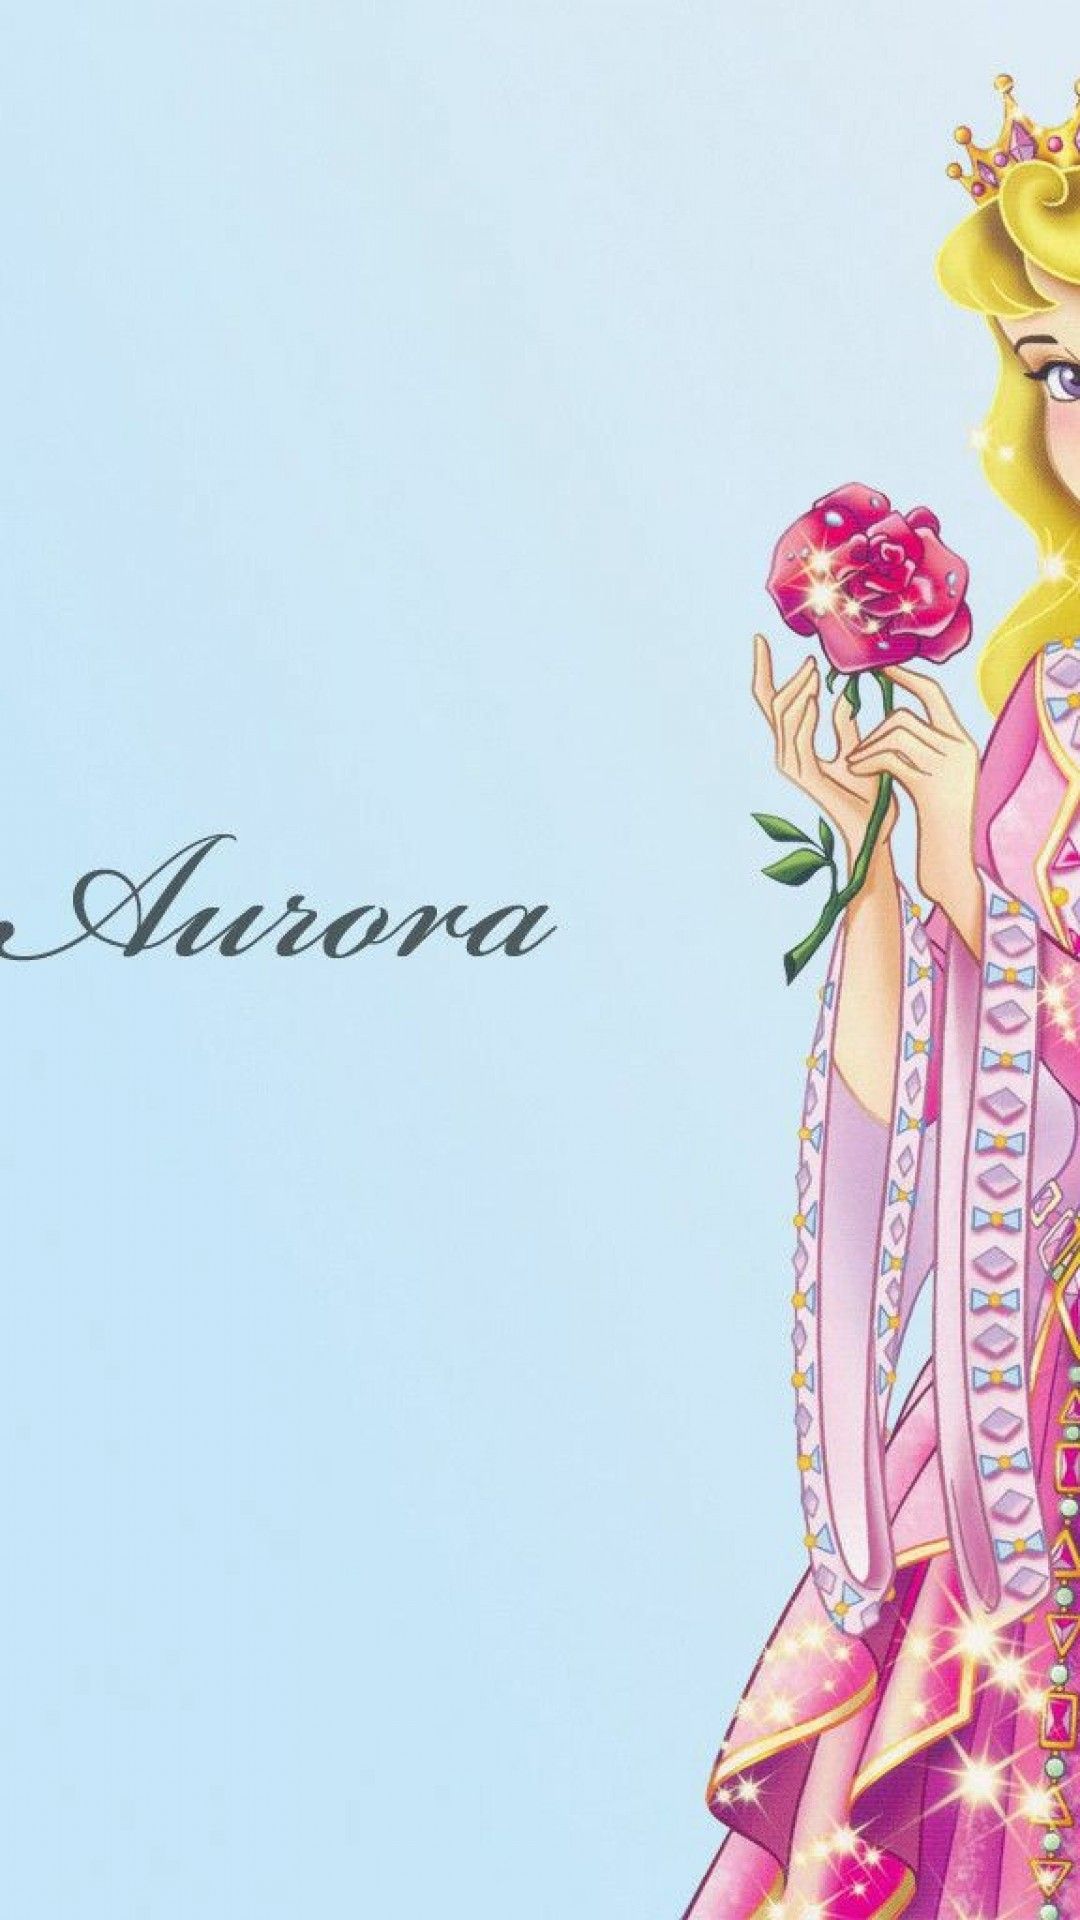 Princess Aurora Wallpaper